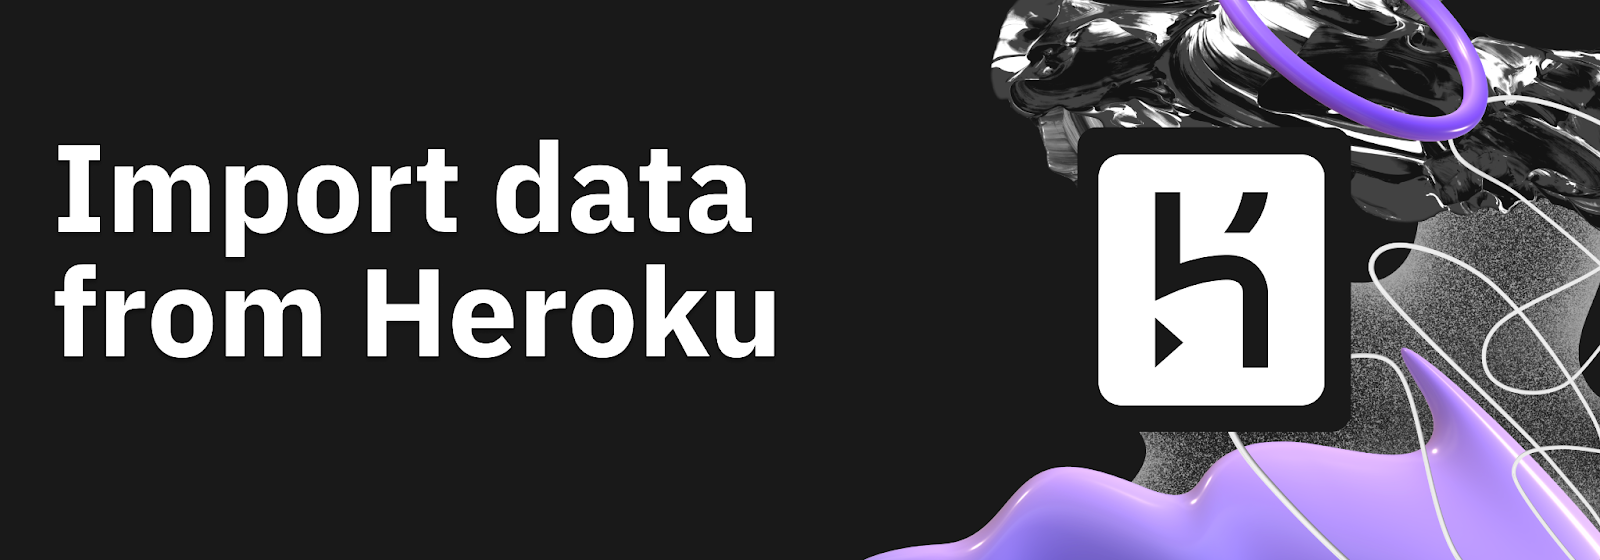 Import data from Heroku to Neon